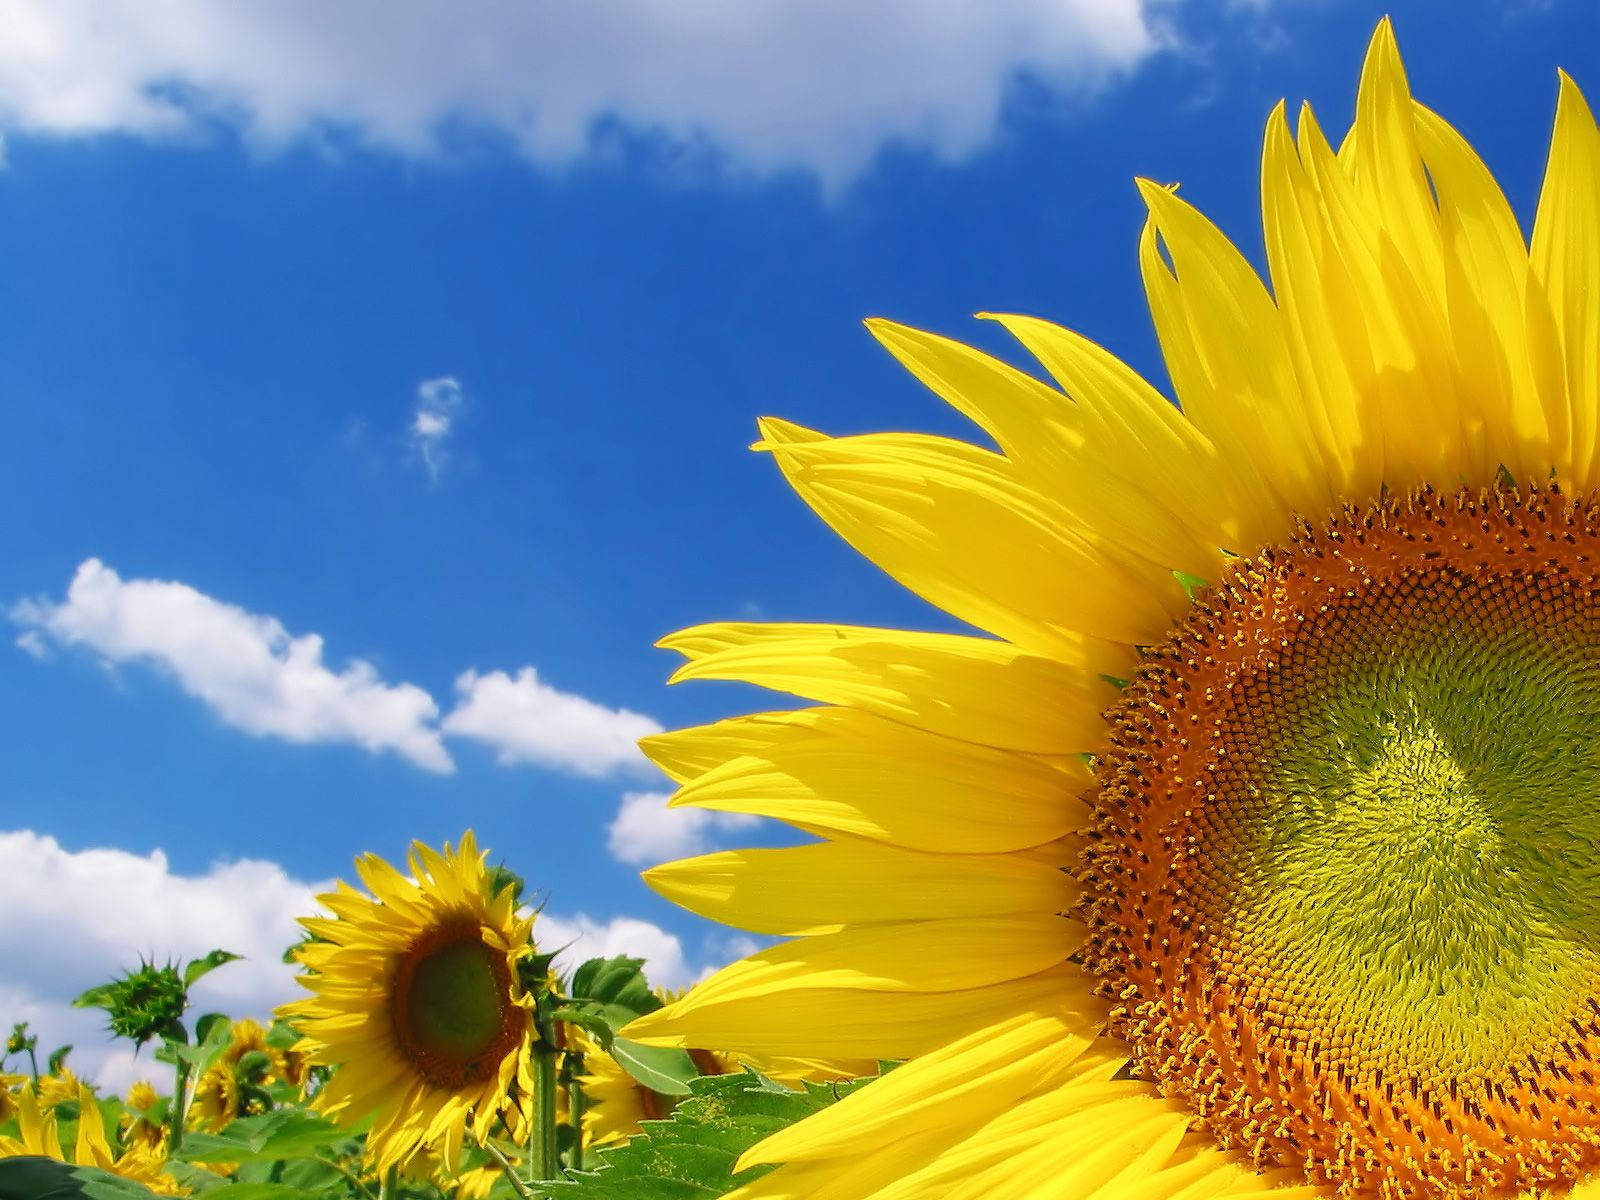 Enjoy the beauty of bright sunflowers Wallpaper